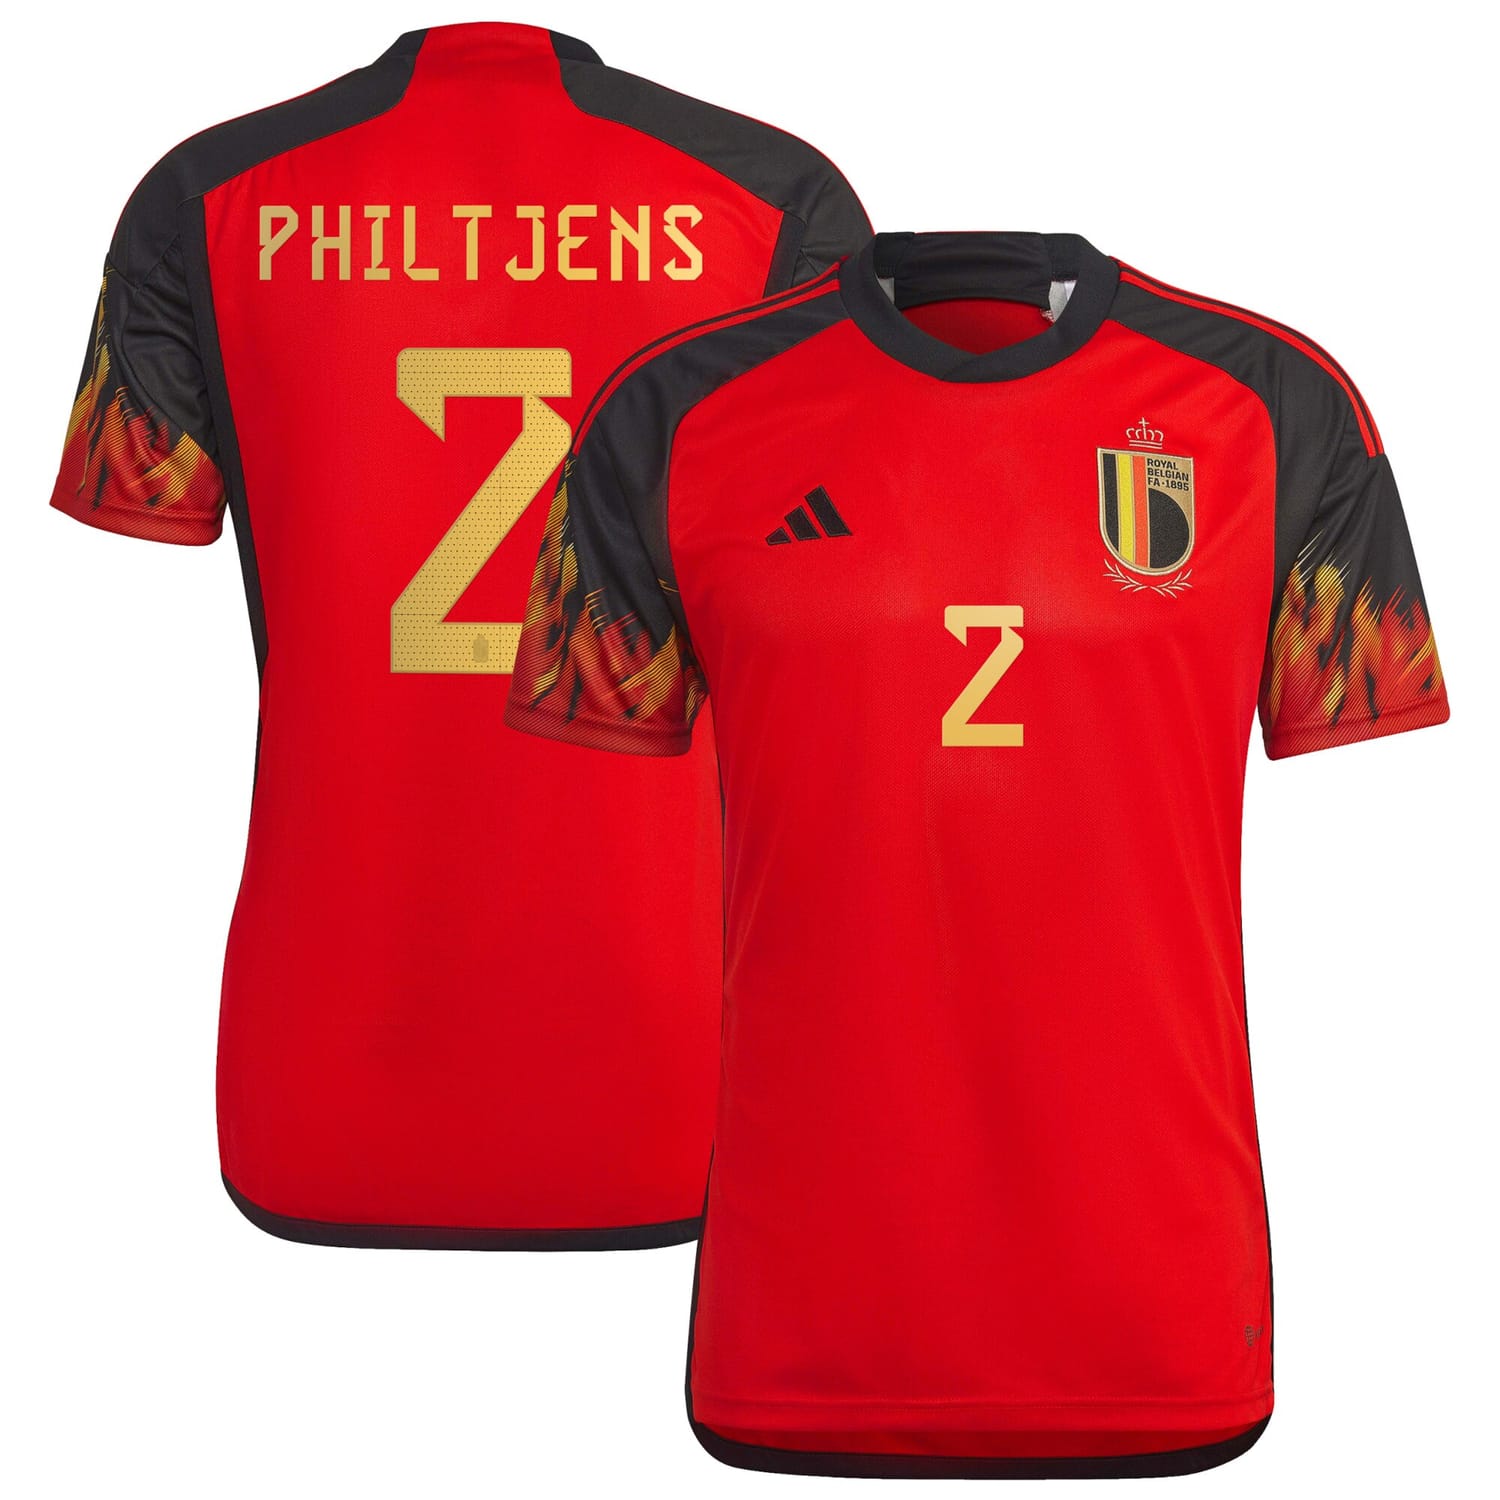 Belgium National Team Home Jersey Shirt 2022 player Davina Philtjens 2 printing for Men